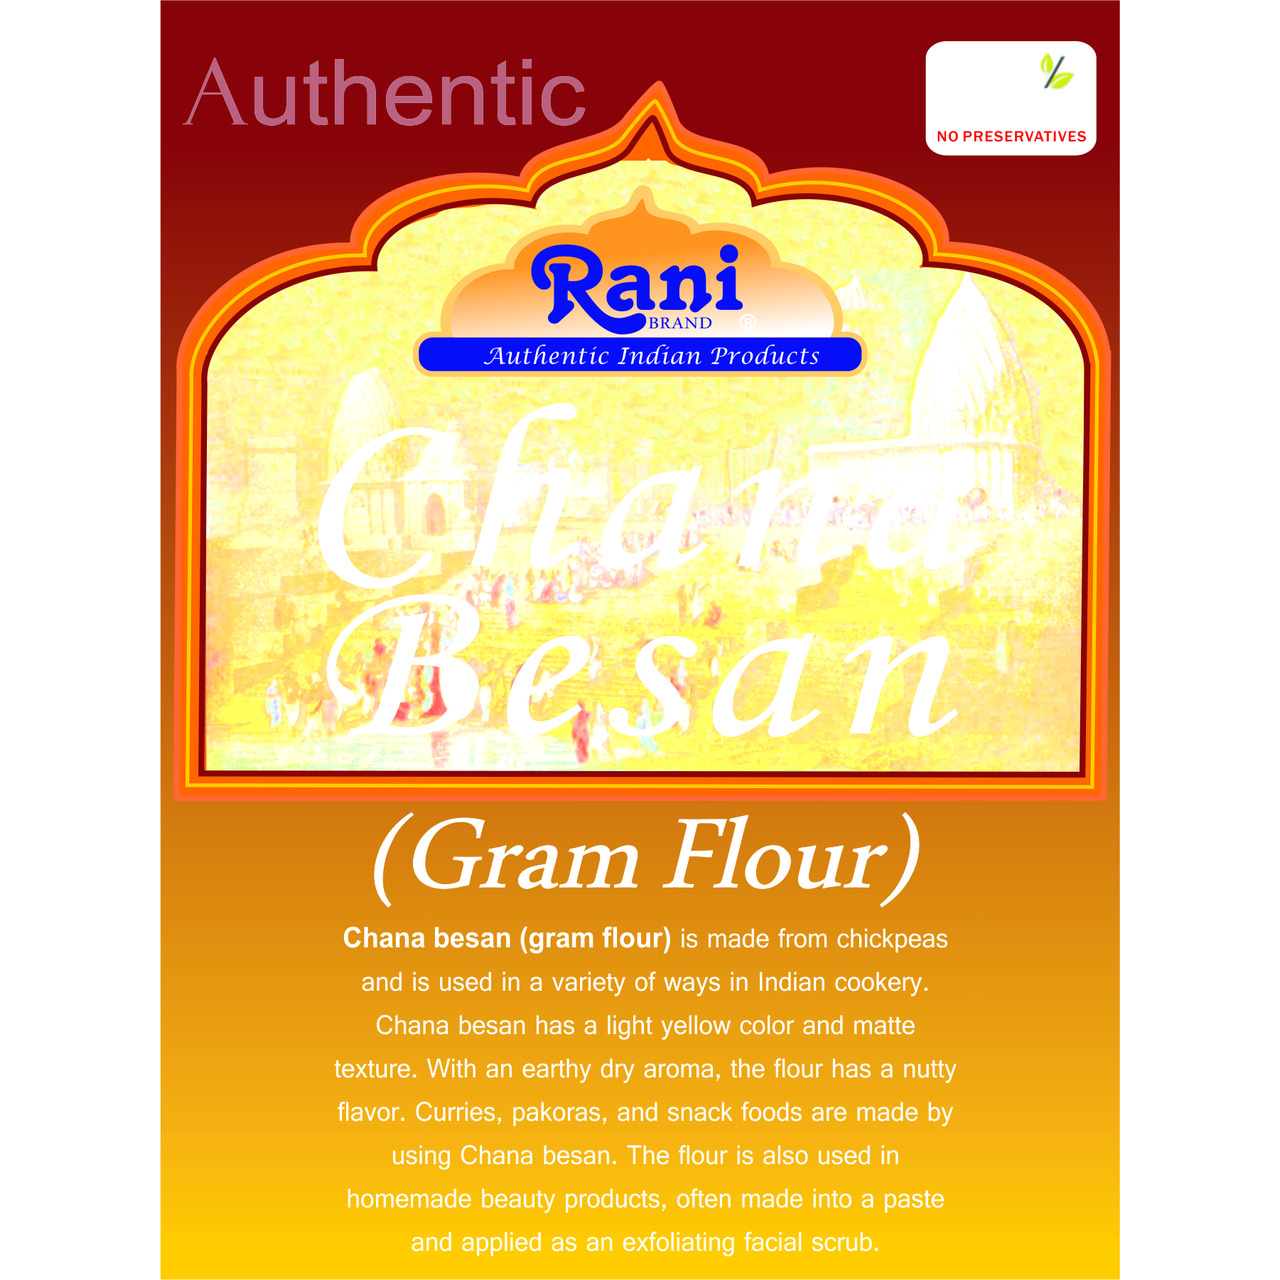 Rani Chana Besan - Chickpeas Flour, Gram (Pet Jar) 4lb (64oz) ~ All Natural | Vegan | Gluten Free Ingredients | NON-GMO | Indian Origin